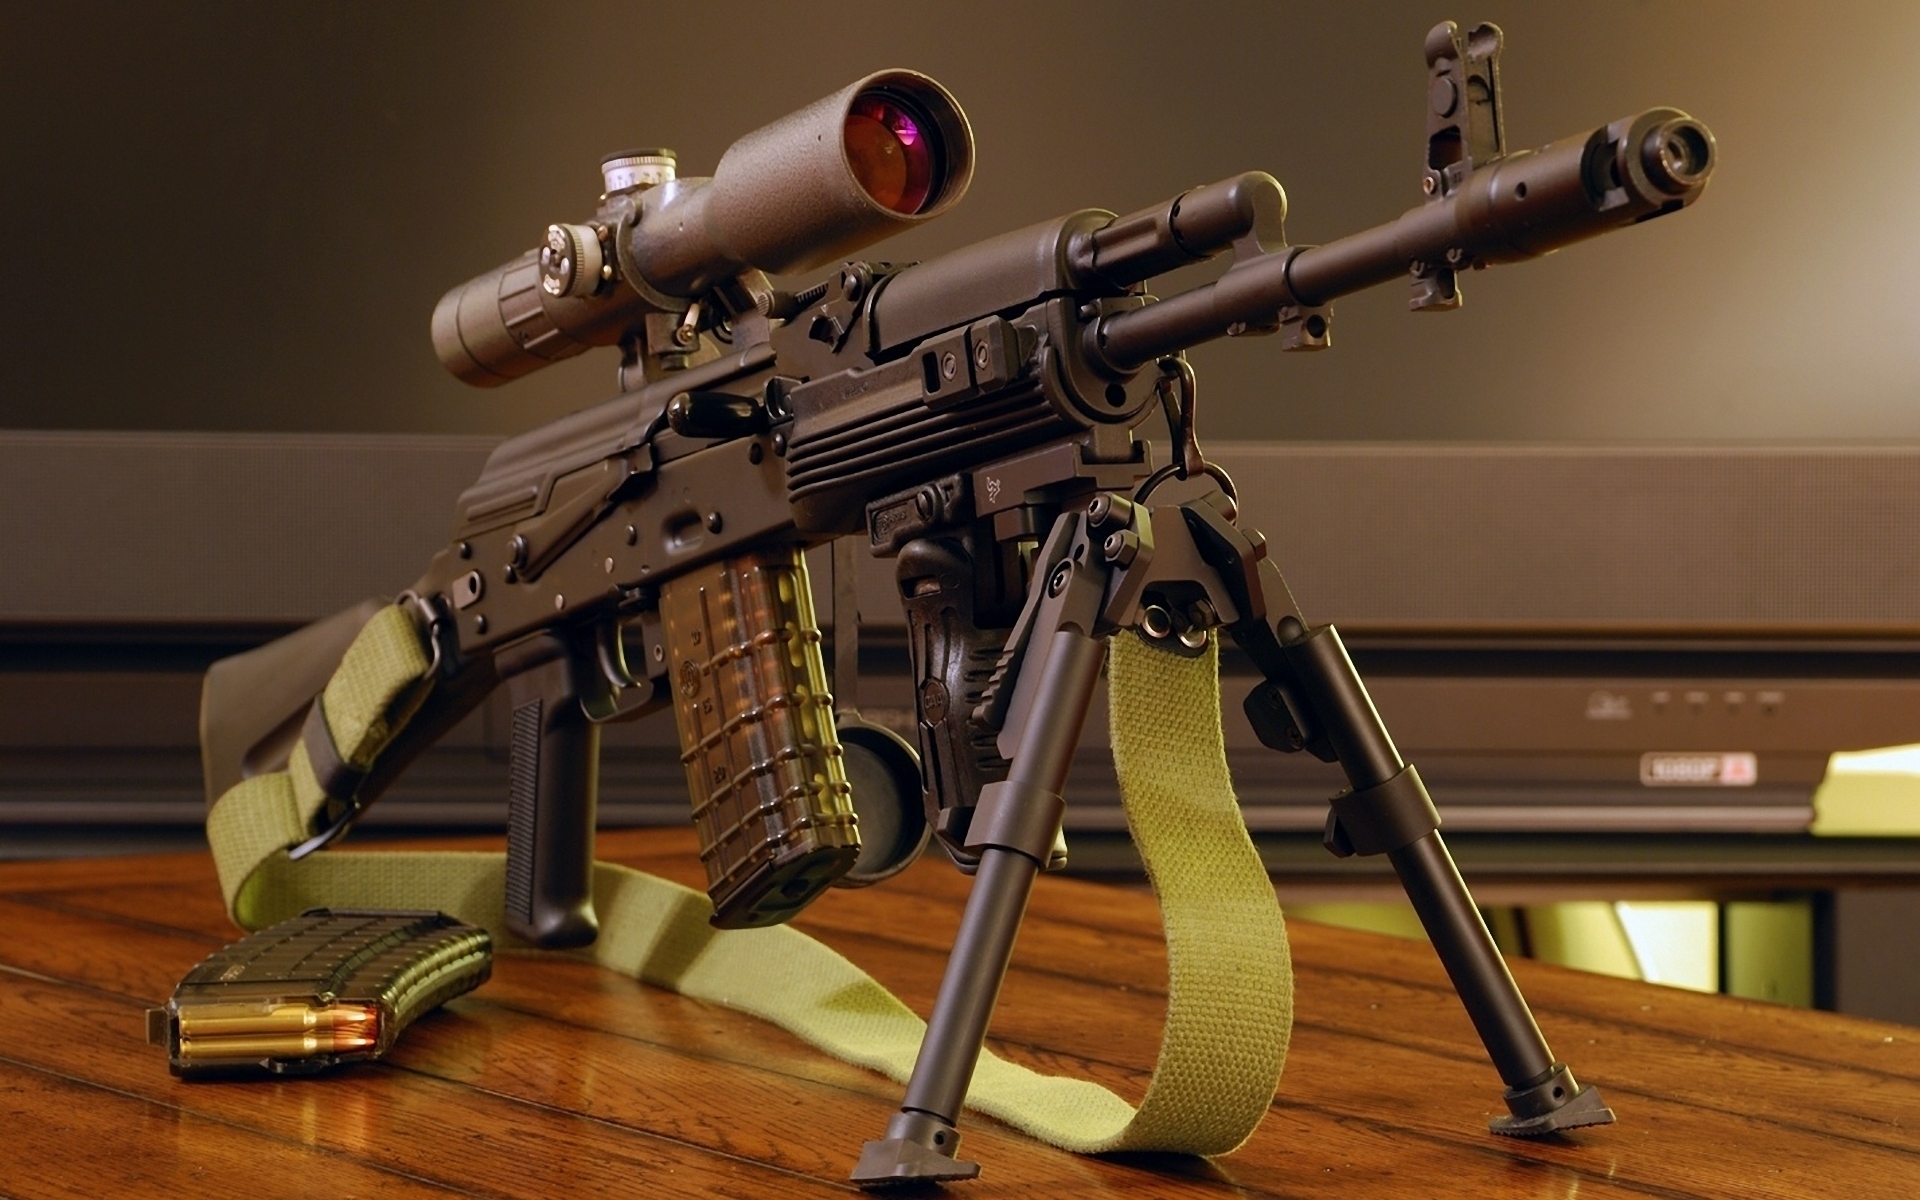 Automatic Gun AK-101 for 1920 x 1200 widescreen resolution